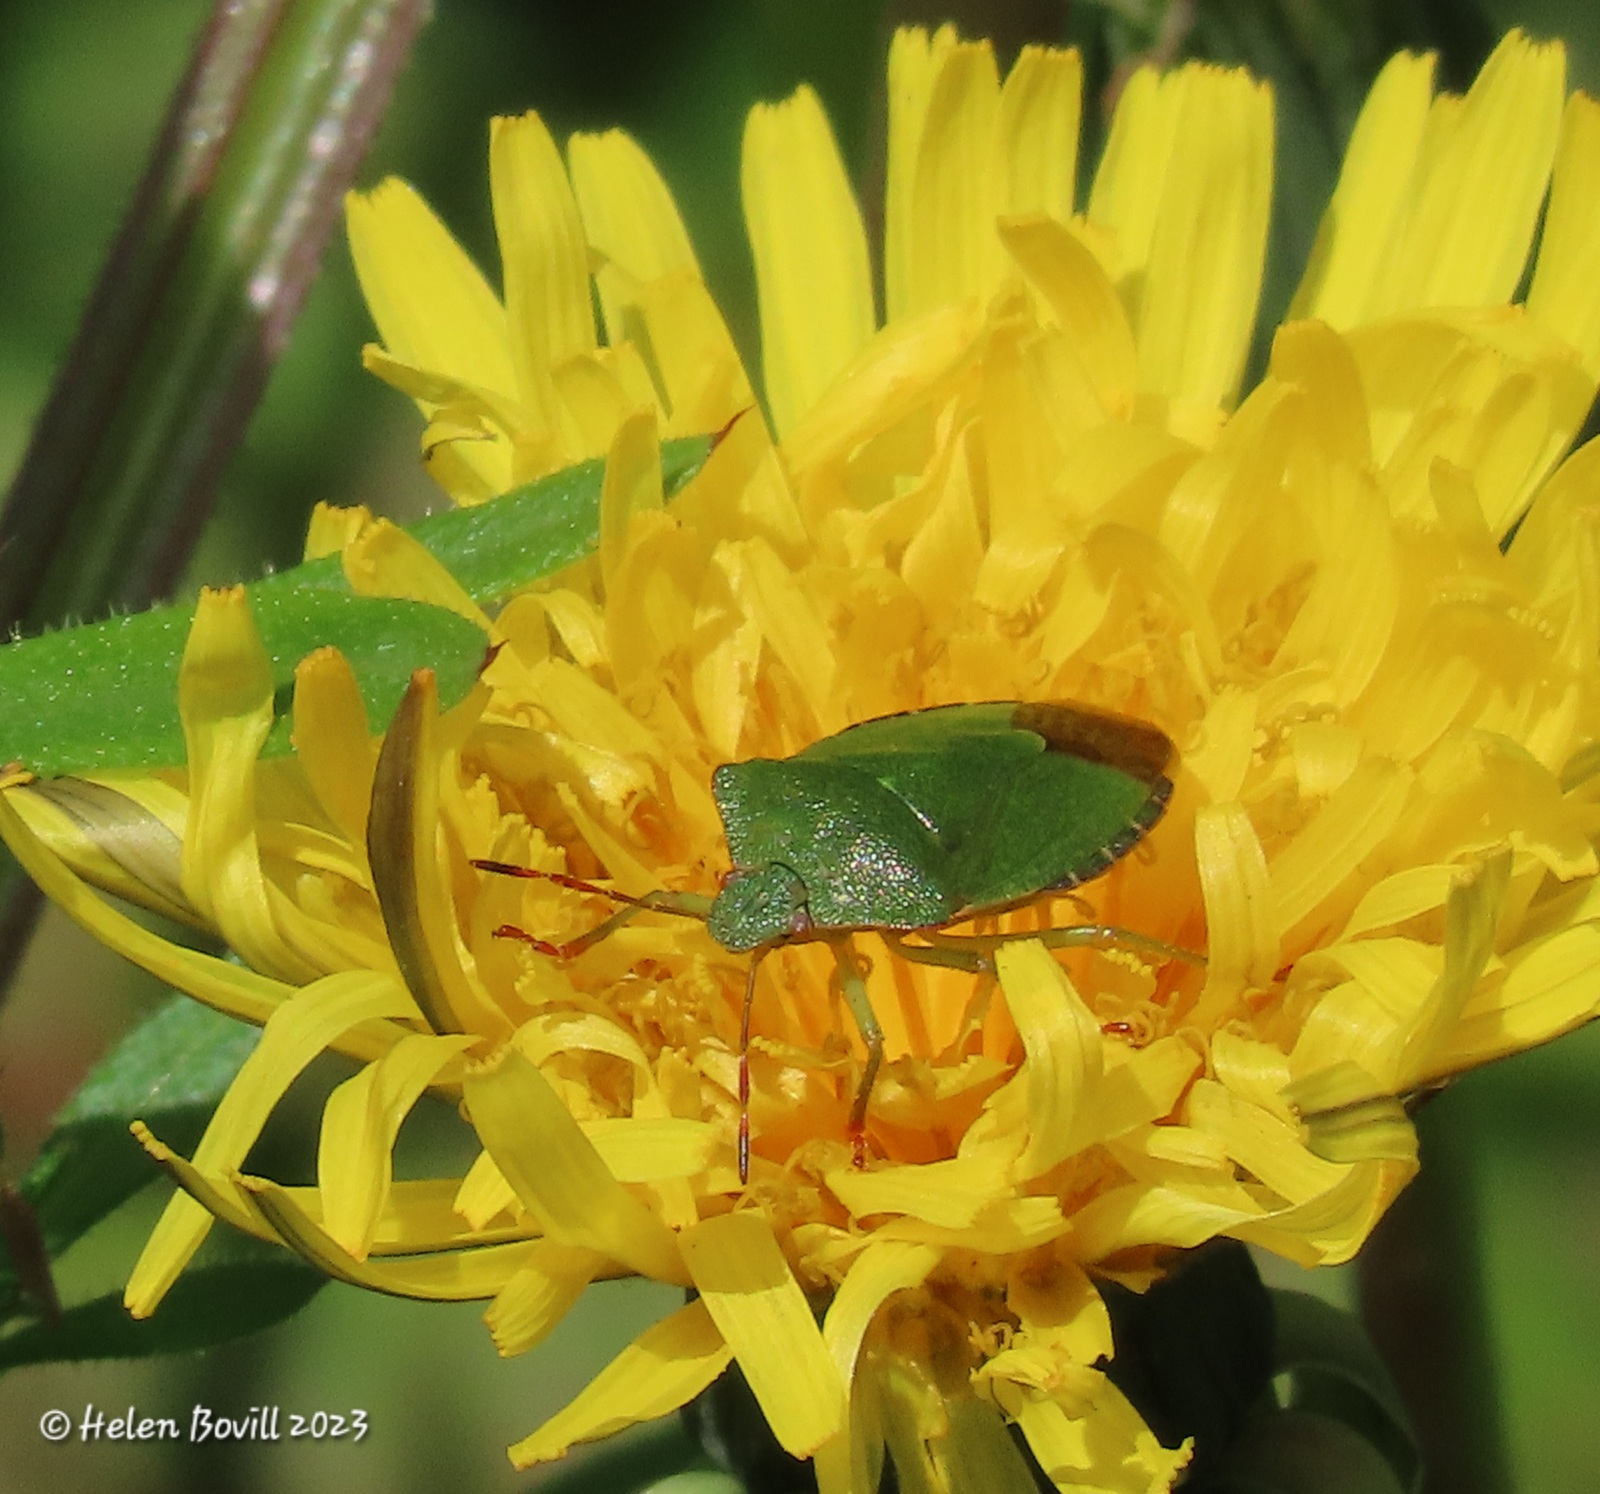 A Common Green Shield Bug on a Dandelion